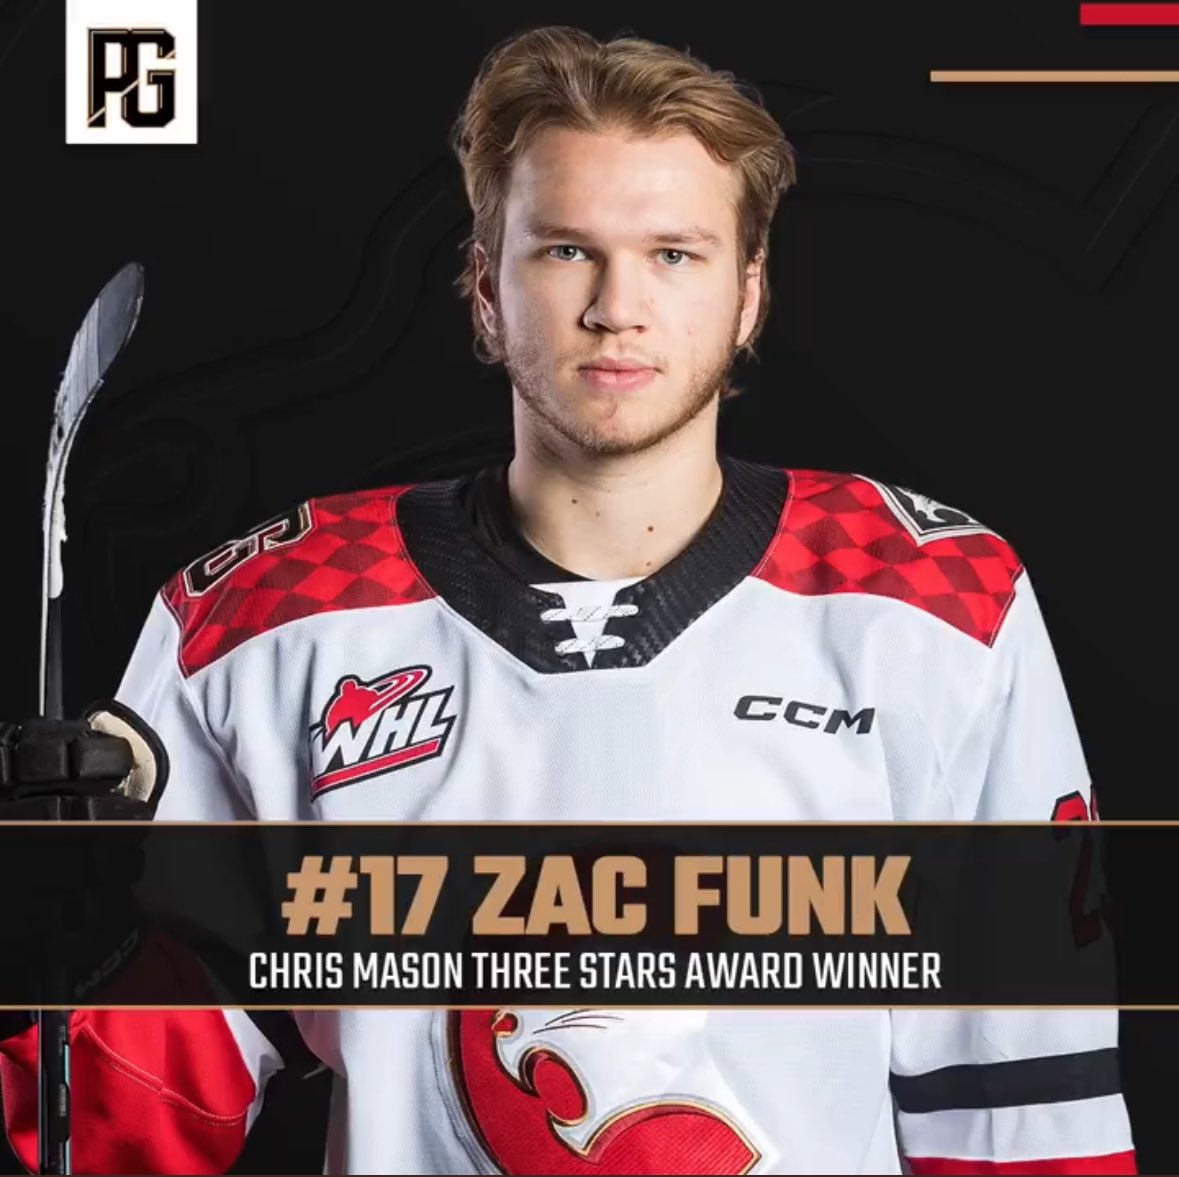 Congratulations Zac Funk!